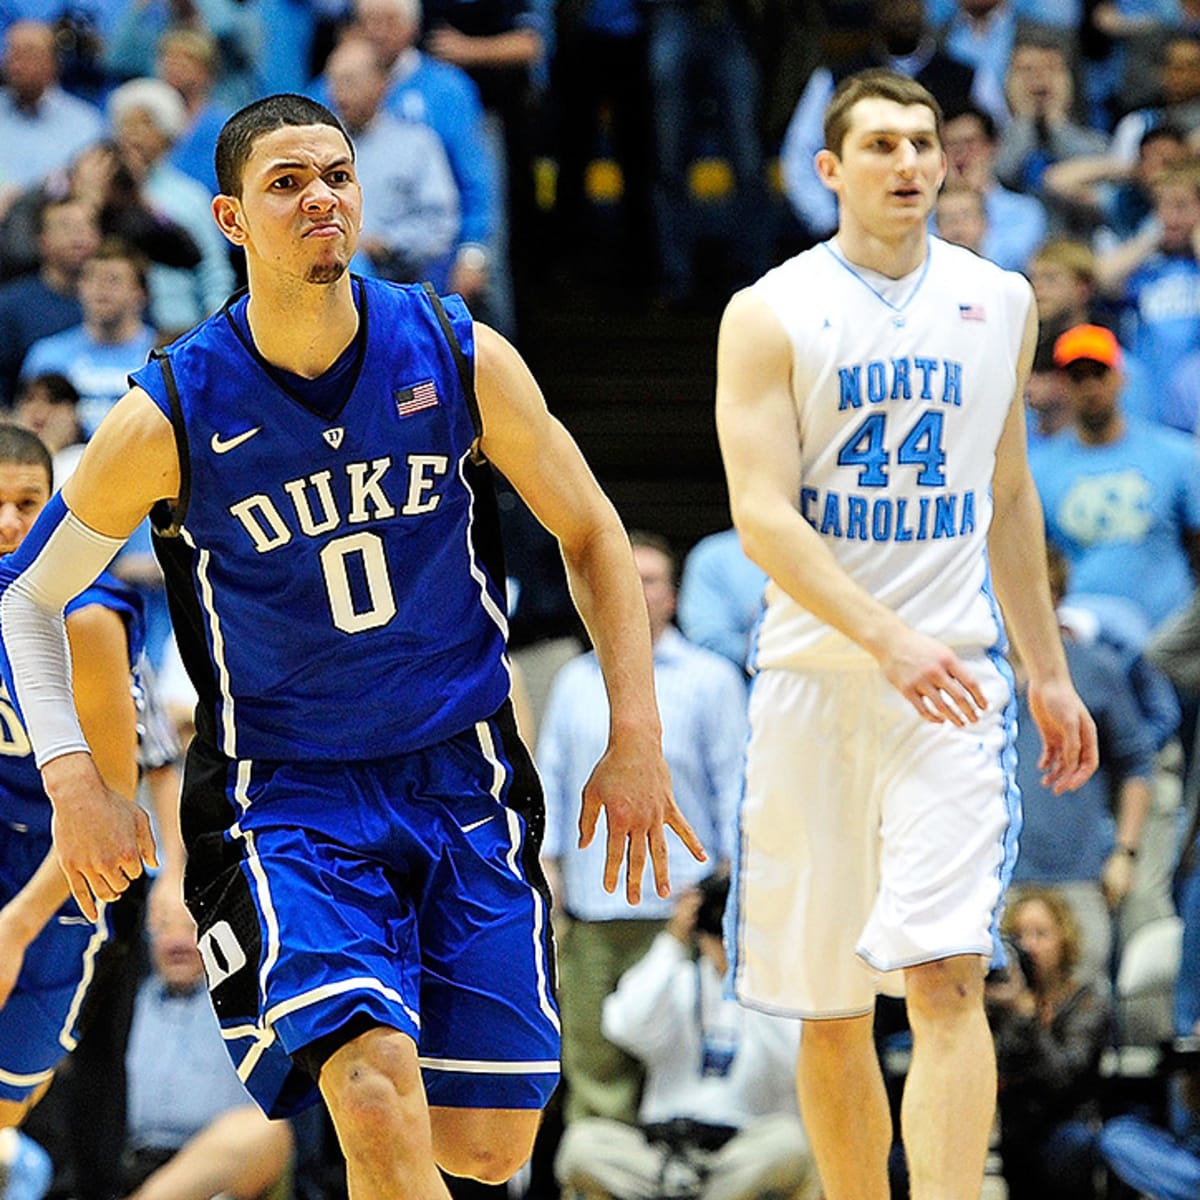 Duke vs UNC 10 best games of college basketballs top rivalry